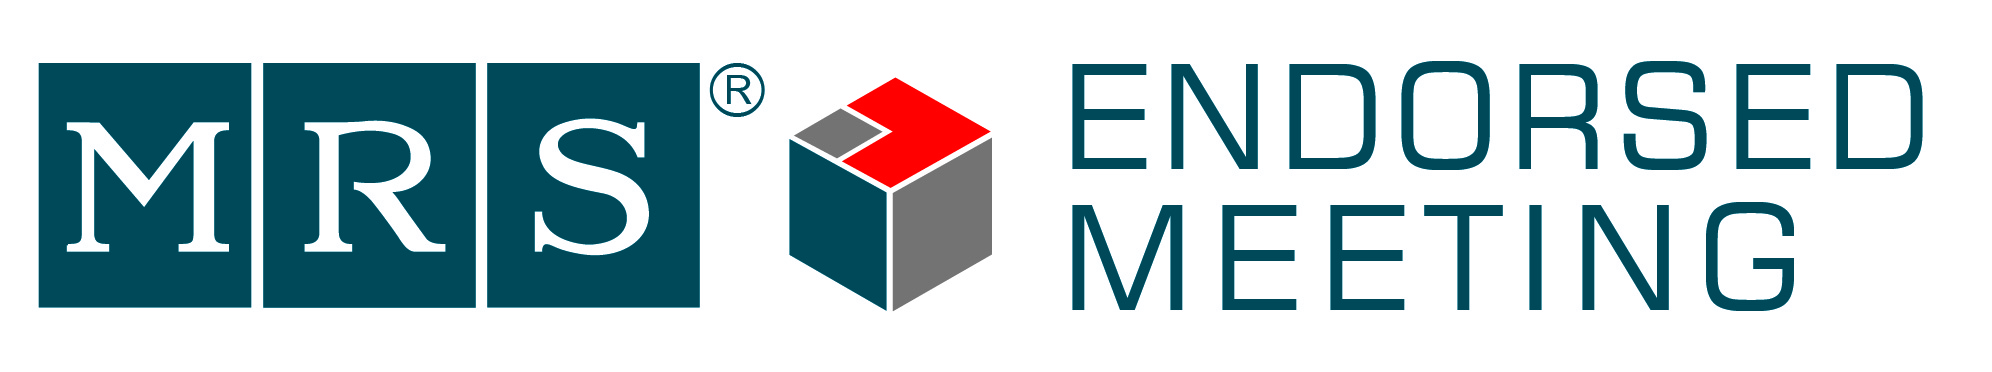 MRS Endorsed Meeting Logo